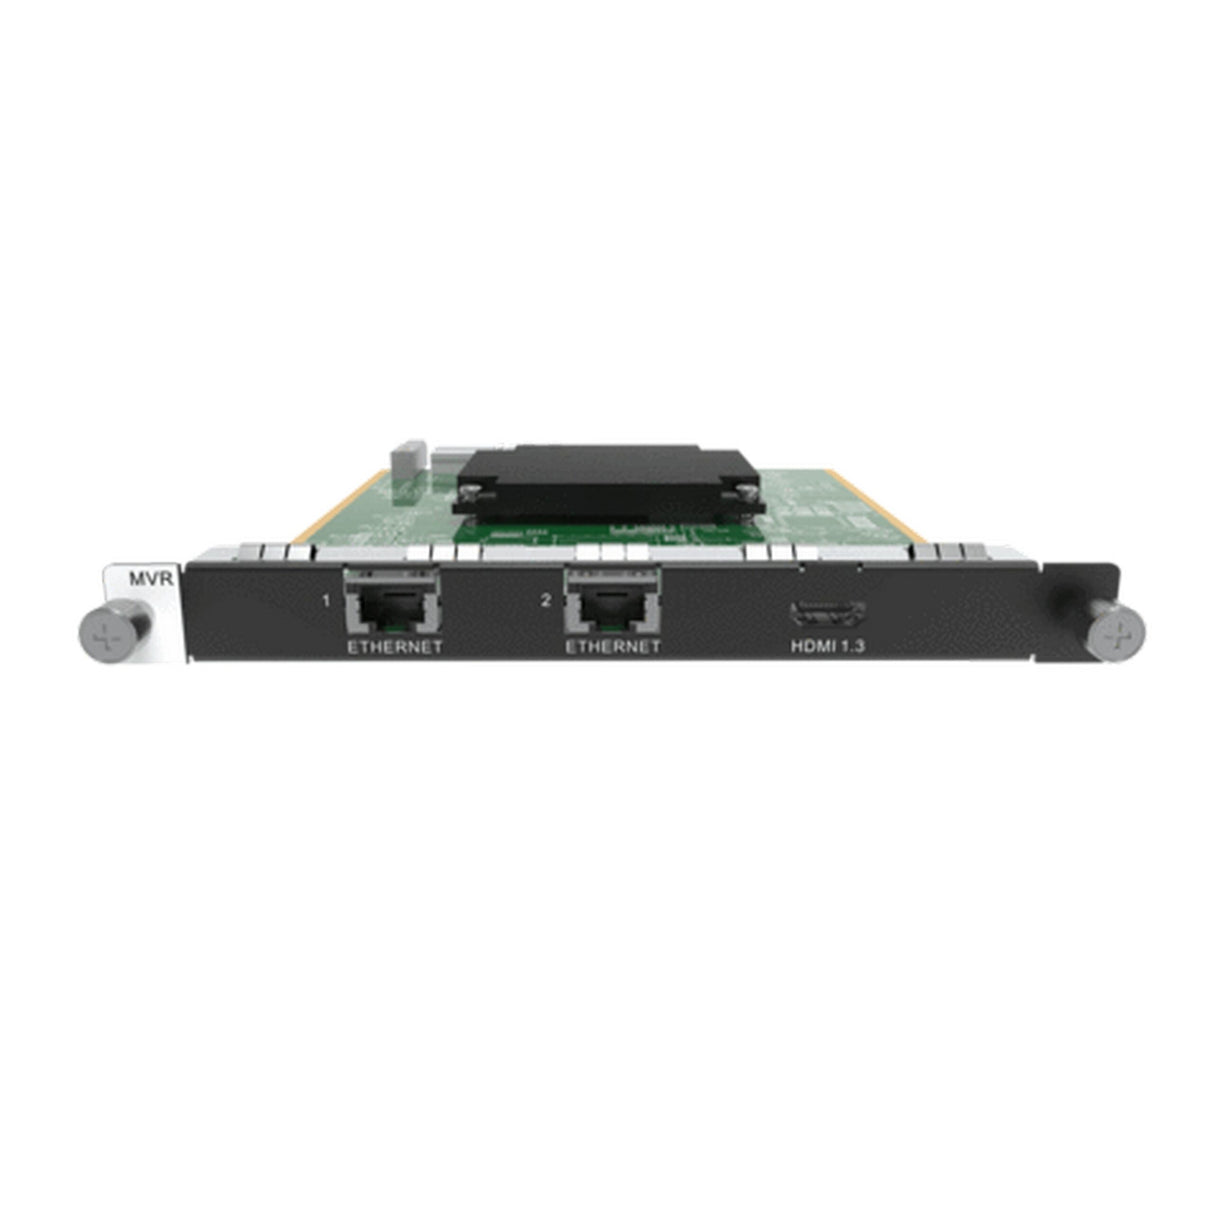 NovaStar H_2xRJ45+1xHDMI1.3 H Series 2x Ethernet and 1x HDMI 1.3 for Monitoring